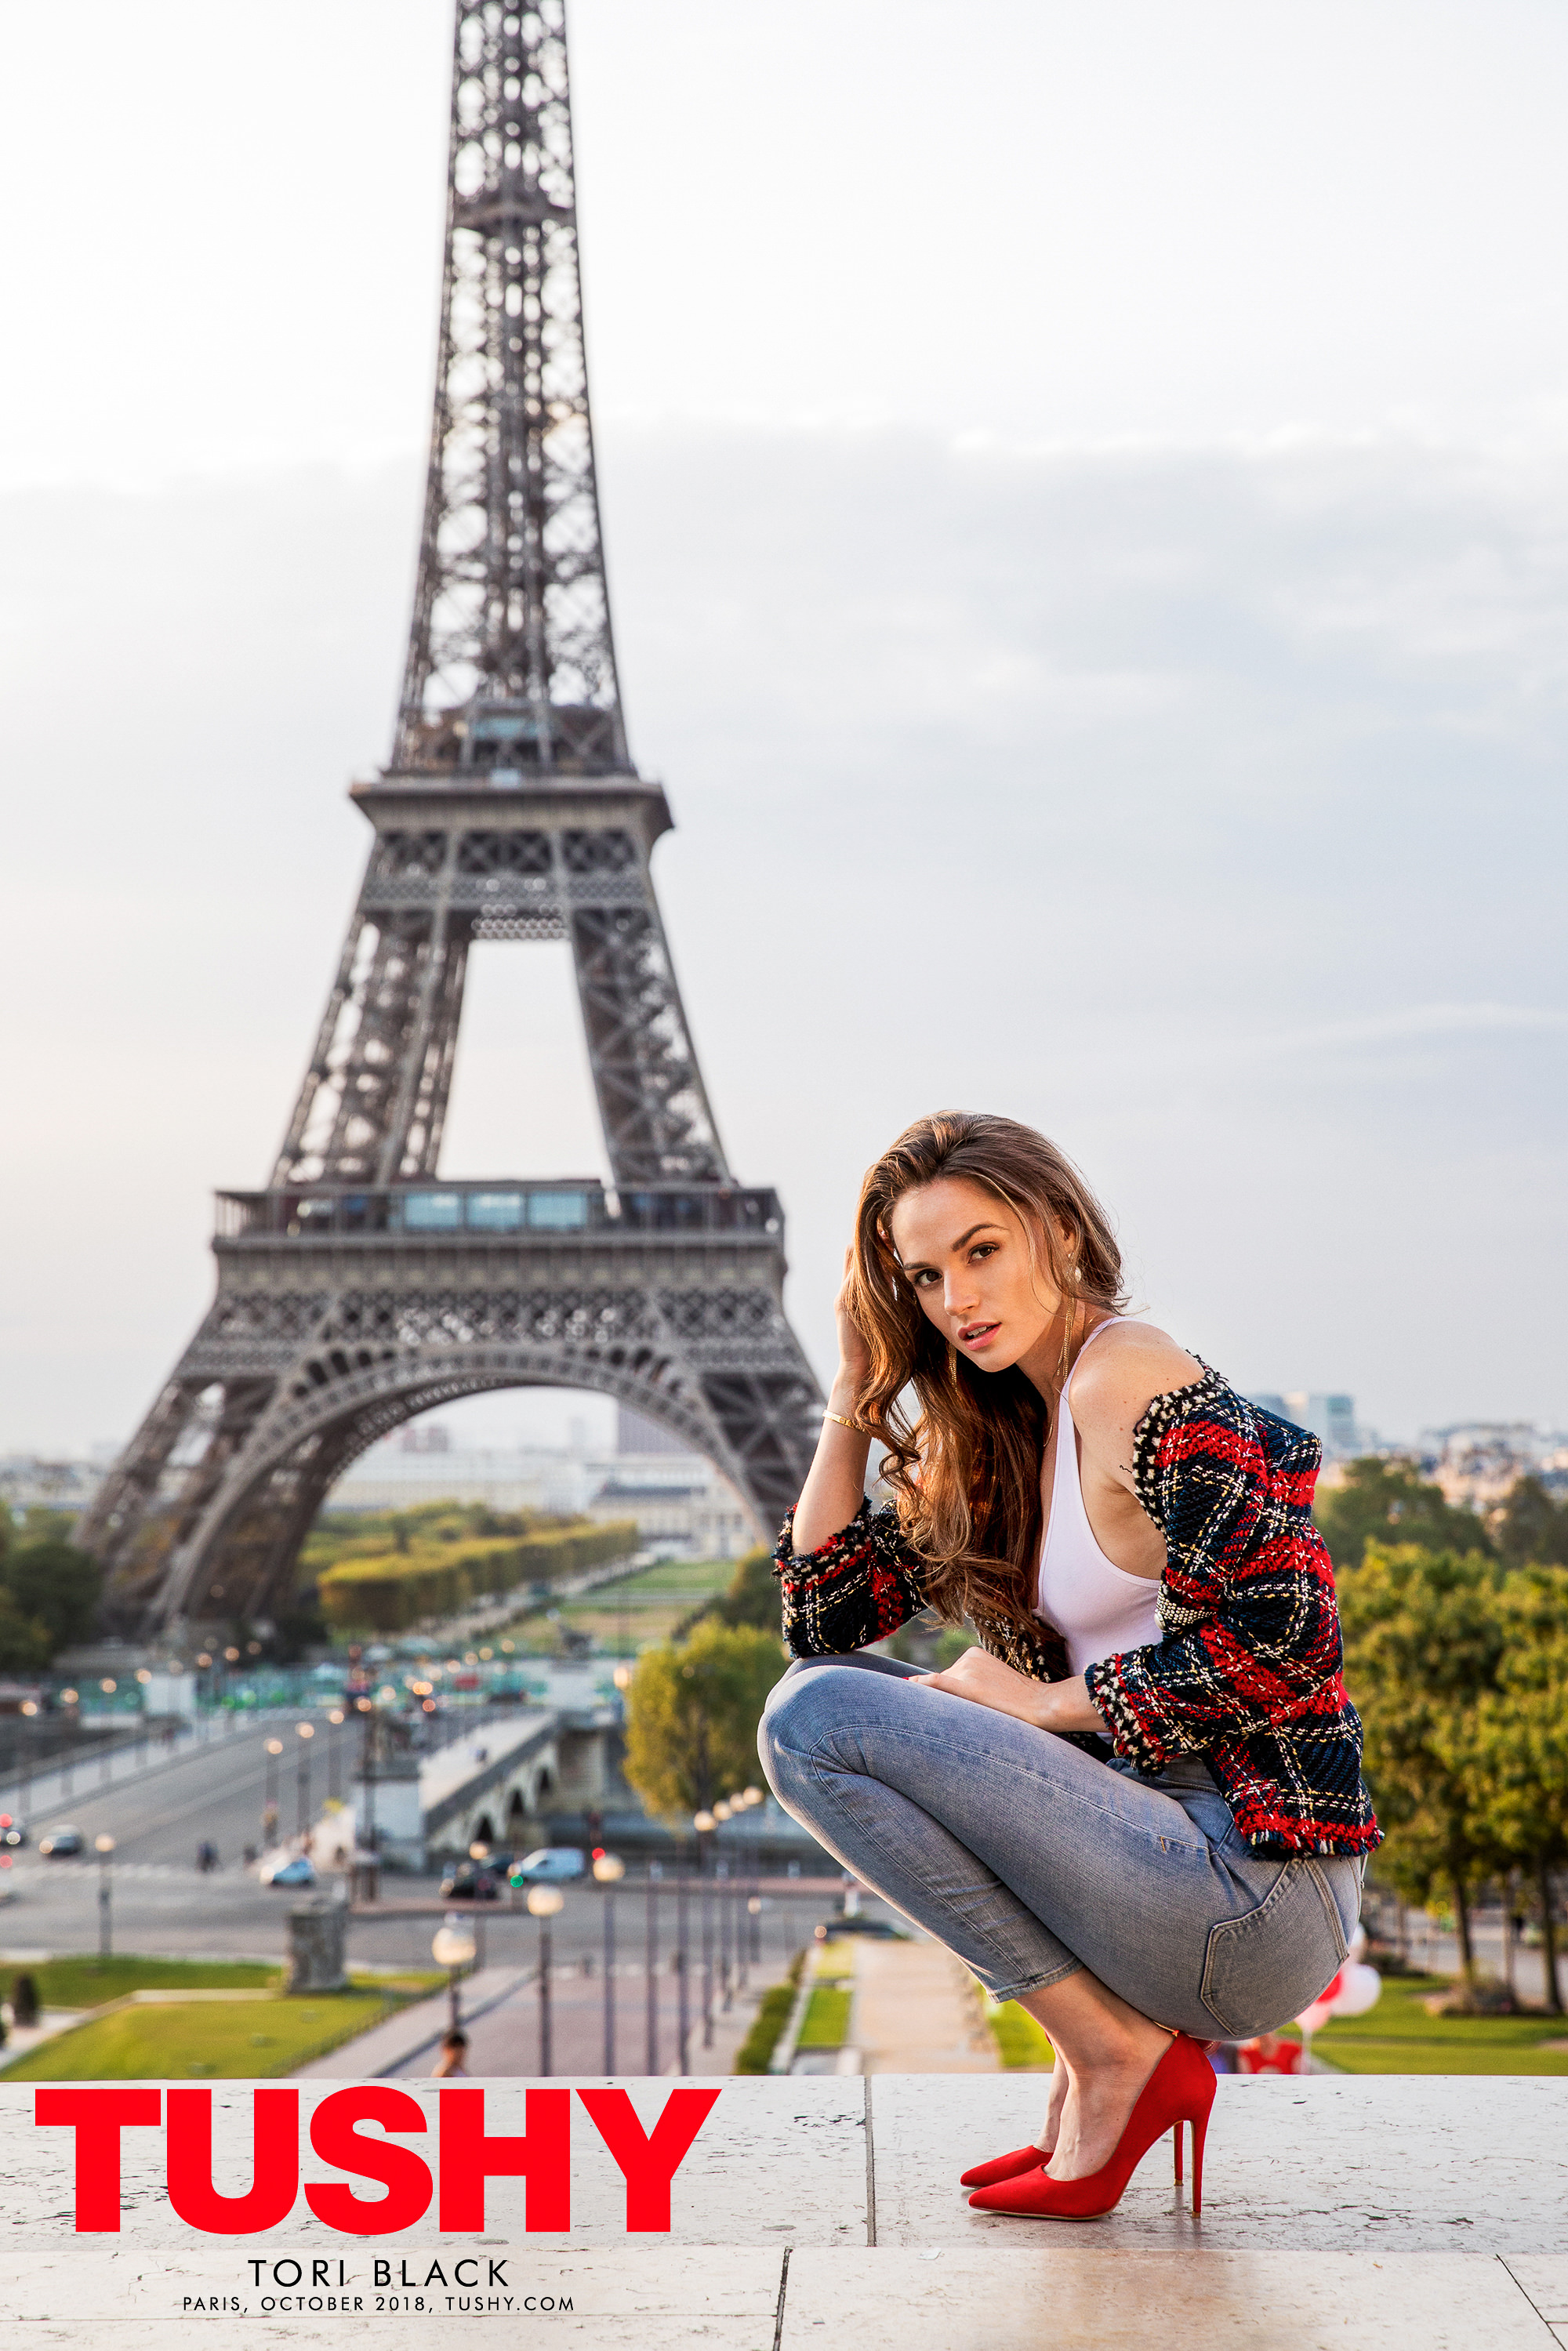 People 2000x2999 Tori Black Tushy pornstar model red heels jeans Eiffel Tower women France Paris Europe landmark American women